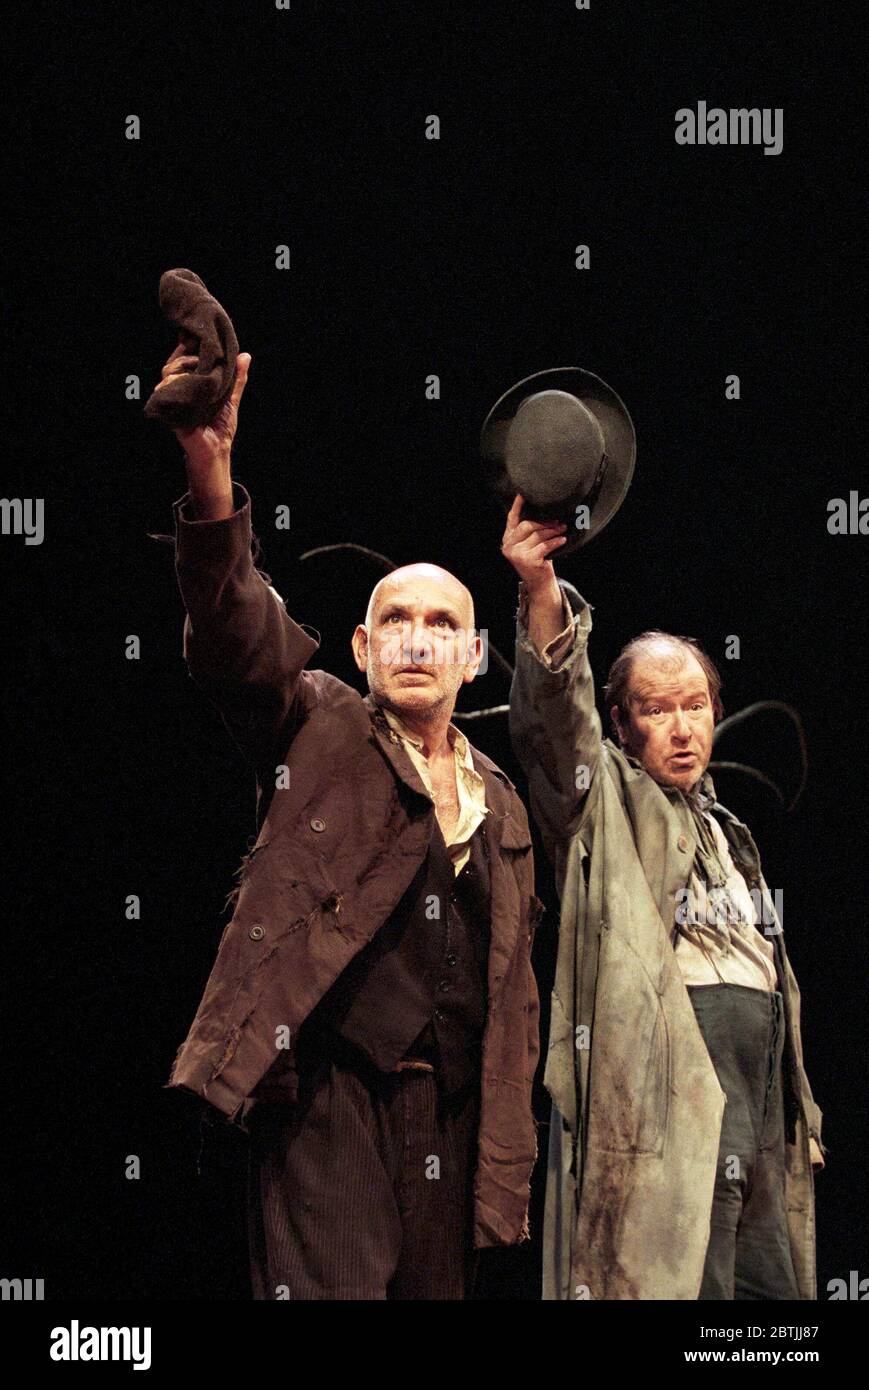 l-r: Ben Kingsley (Estragon), Alan Howard (Vladimir) in WAITING FOR GODOT by Samuel Beckett at the Old Vic Theatre, London SE1  27/06/1997 design: John Gunter director: Peter Hall Stock Photo